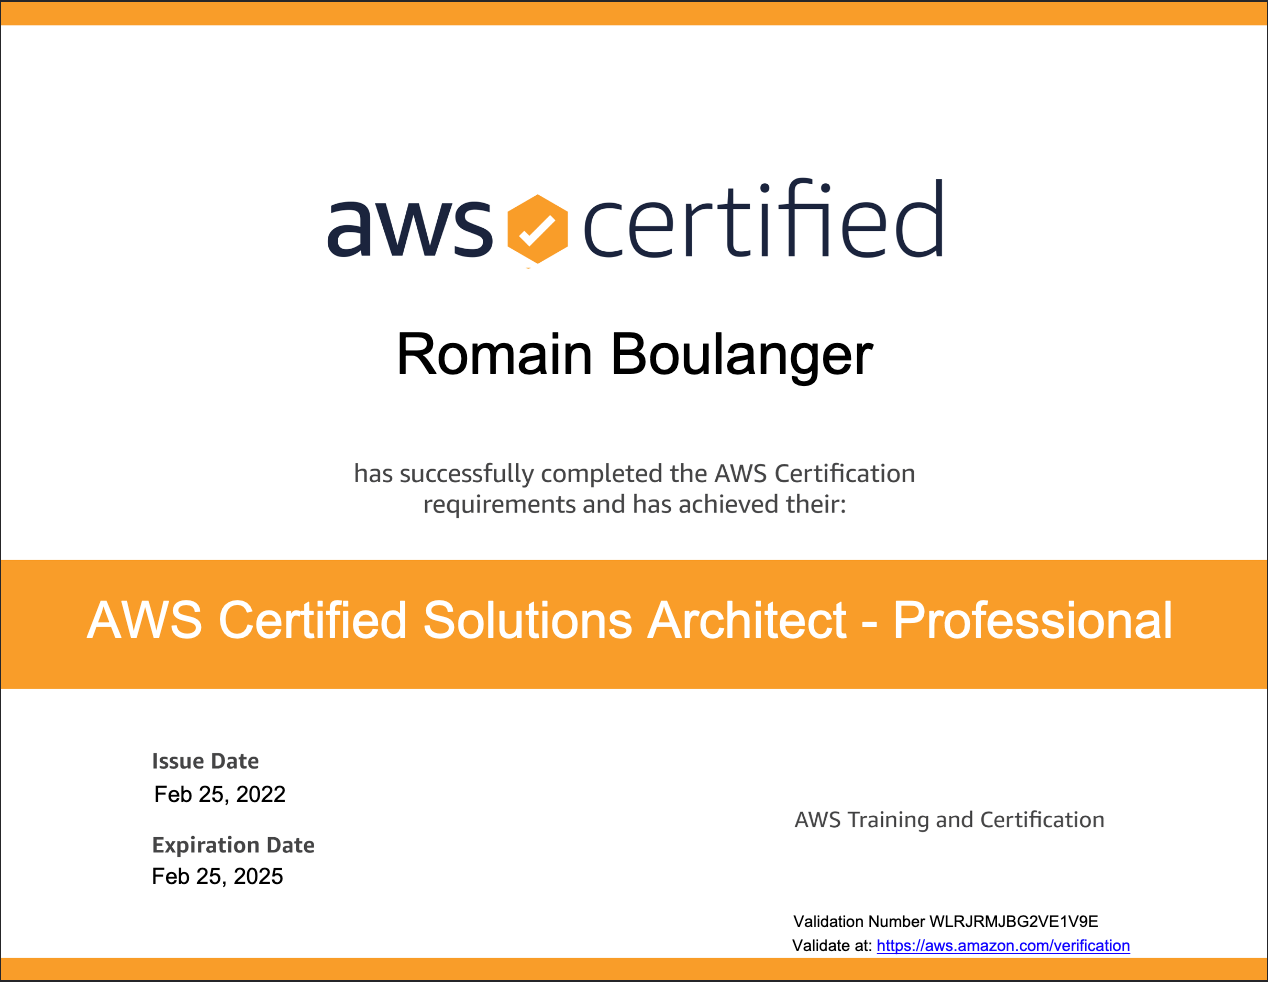 aws-certified-sap-certificate